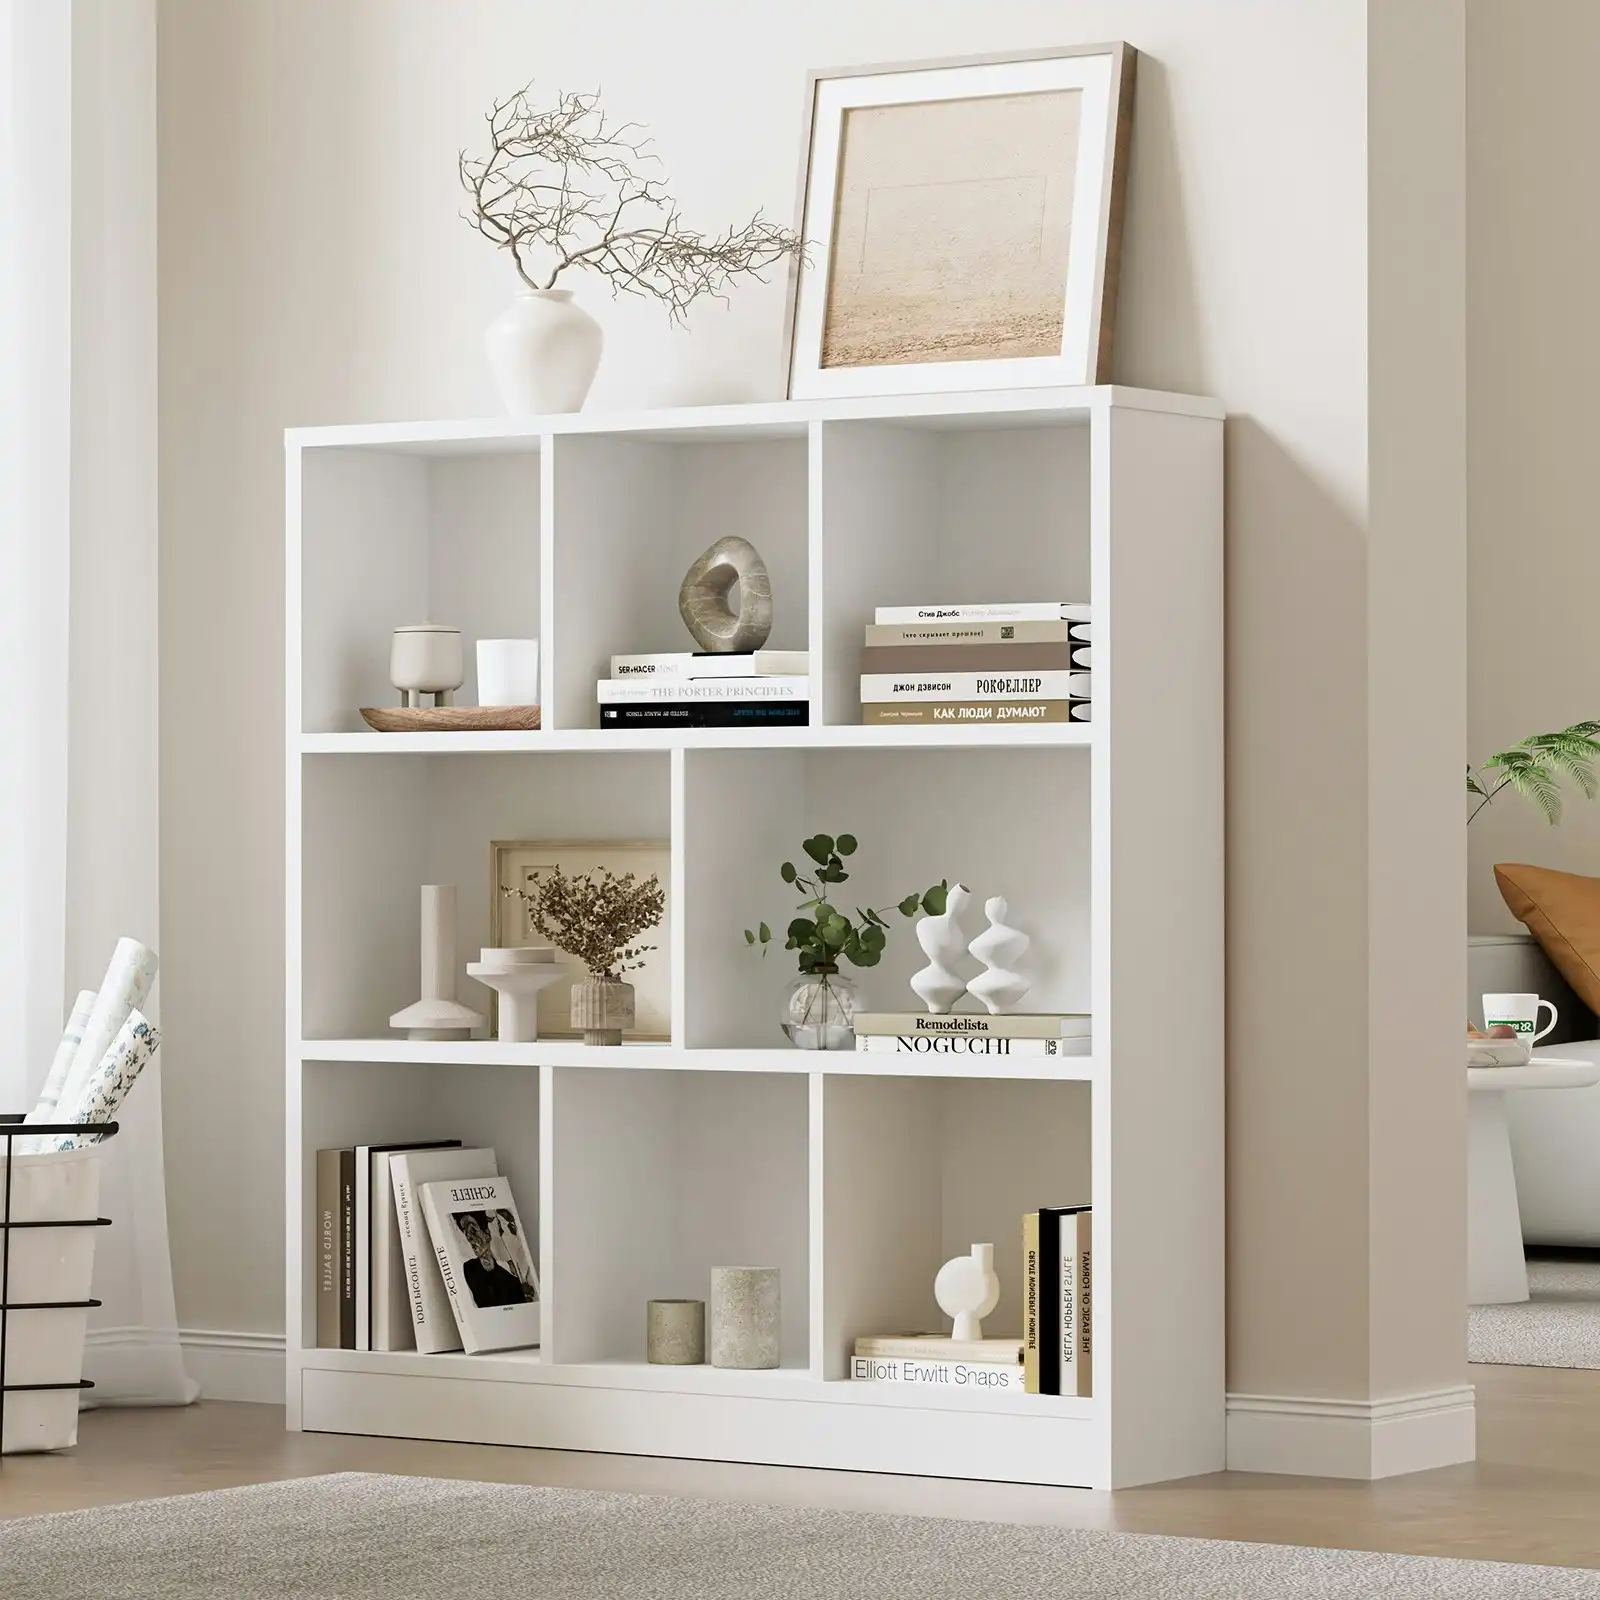 Oikiture Bookshelf Bookcase Display Shelves Unit Storage Organizer Stand White